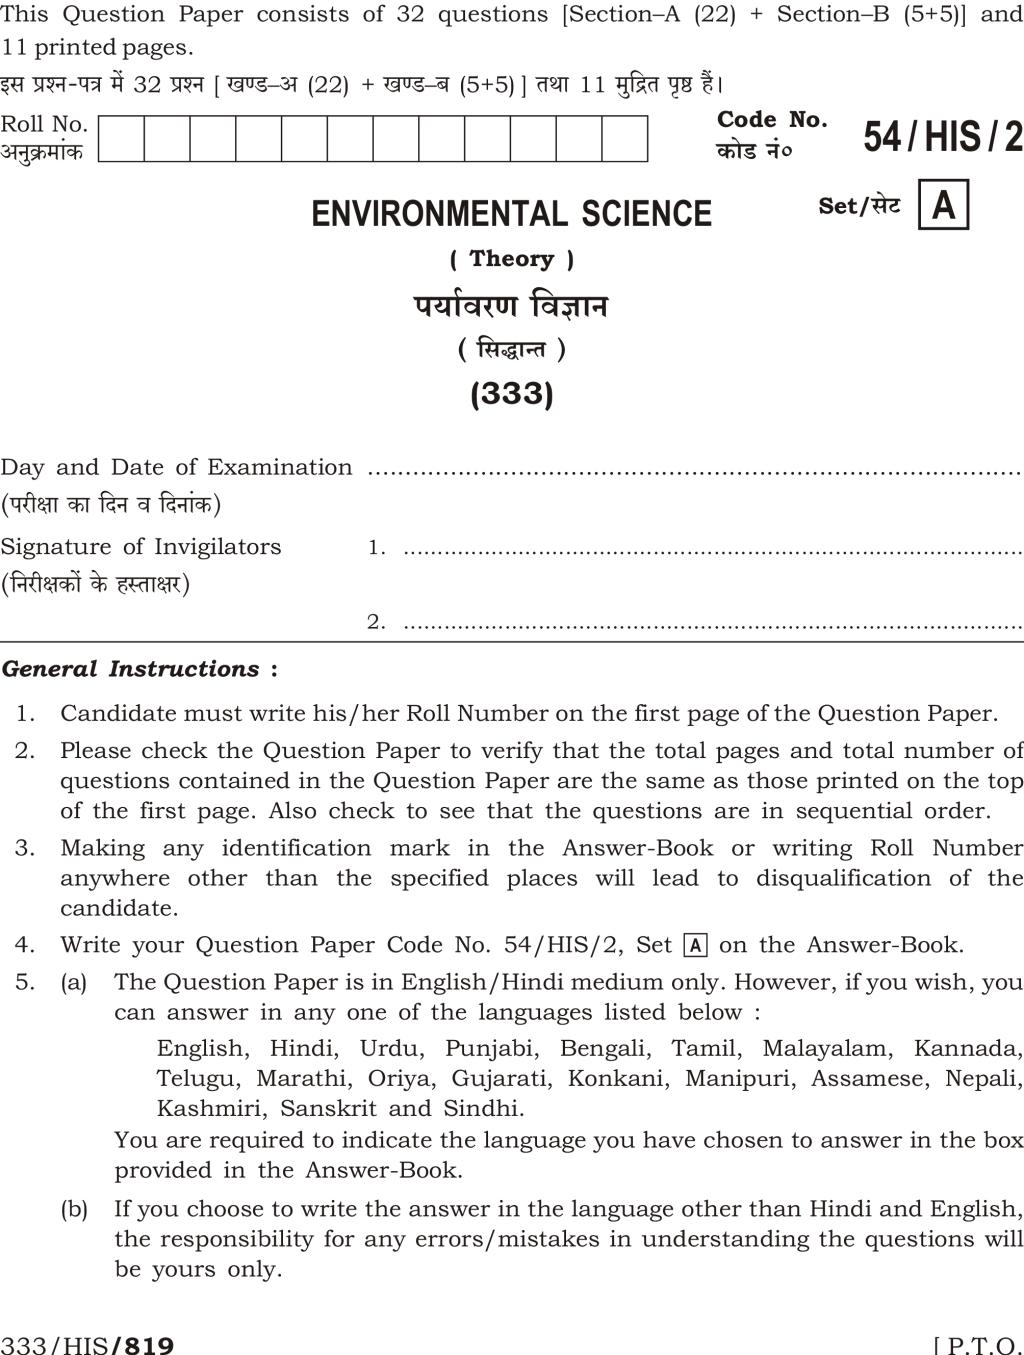 NIOS Class 12 Question Paper Apr 2017 - Environmental Science - Page 1